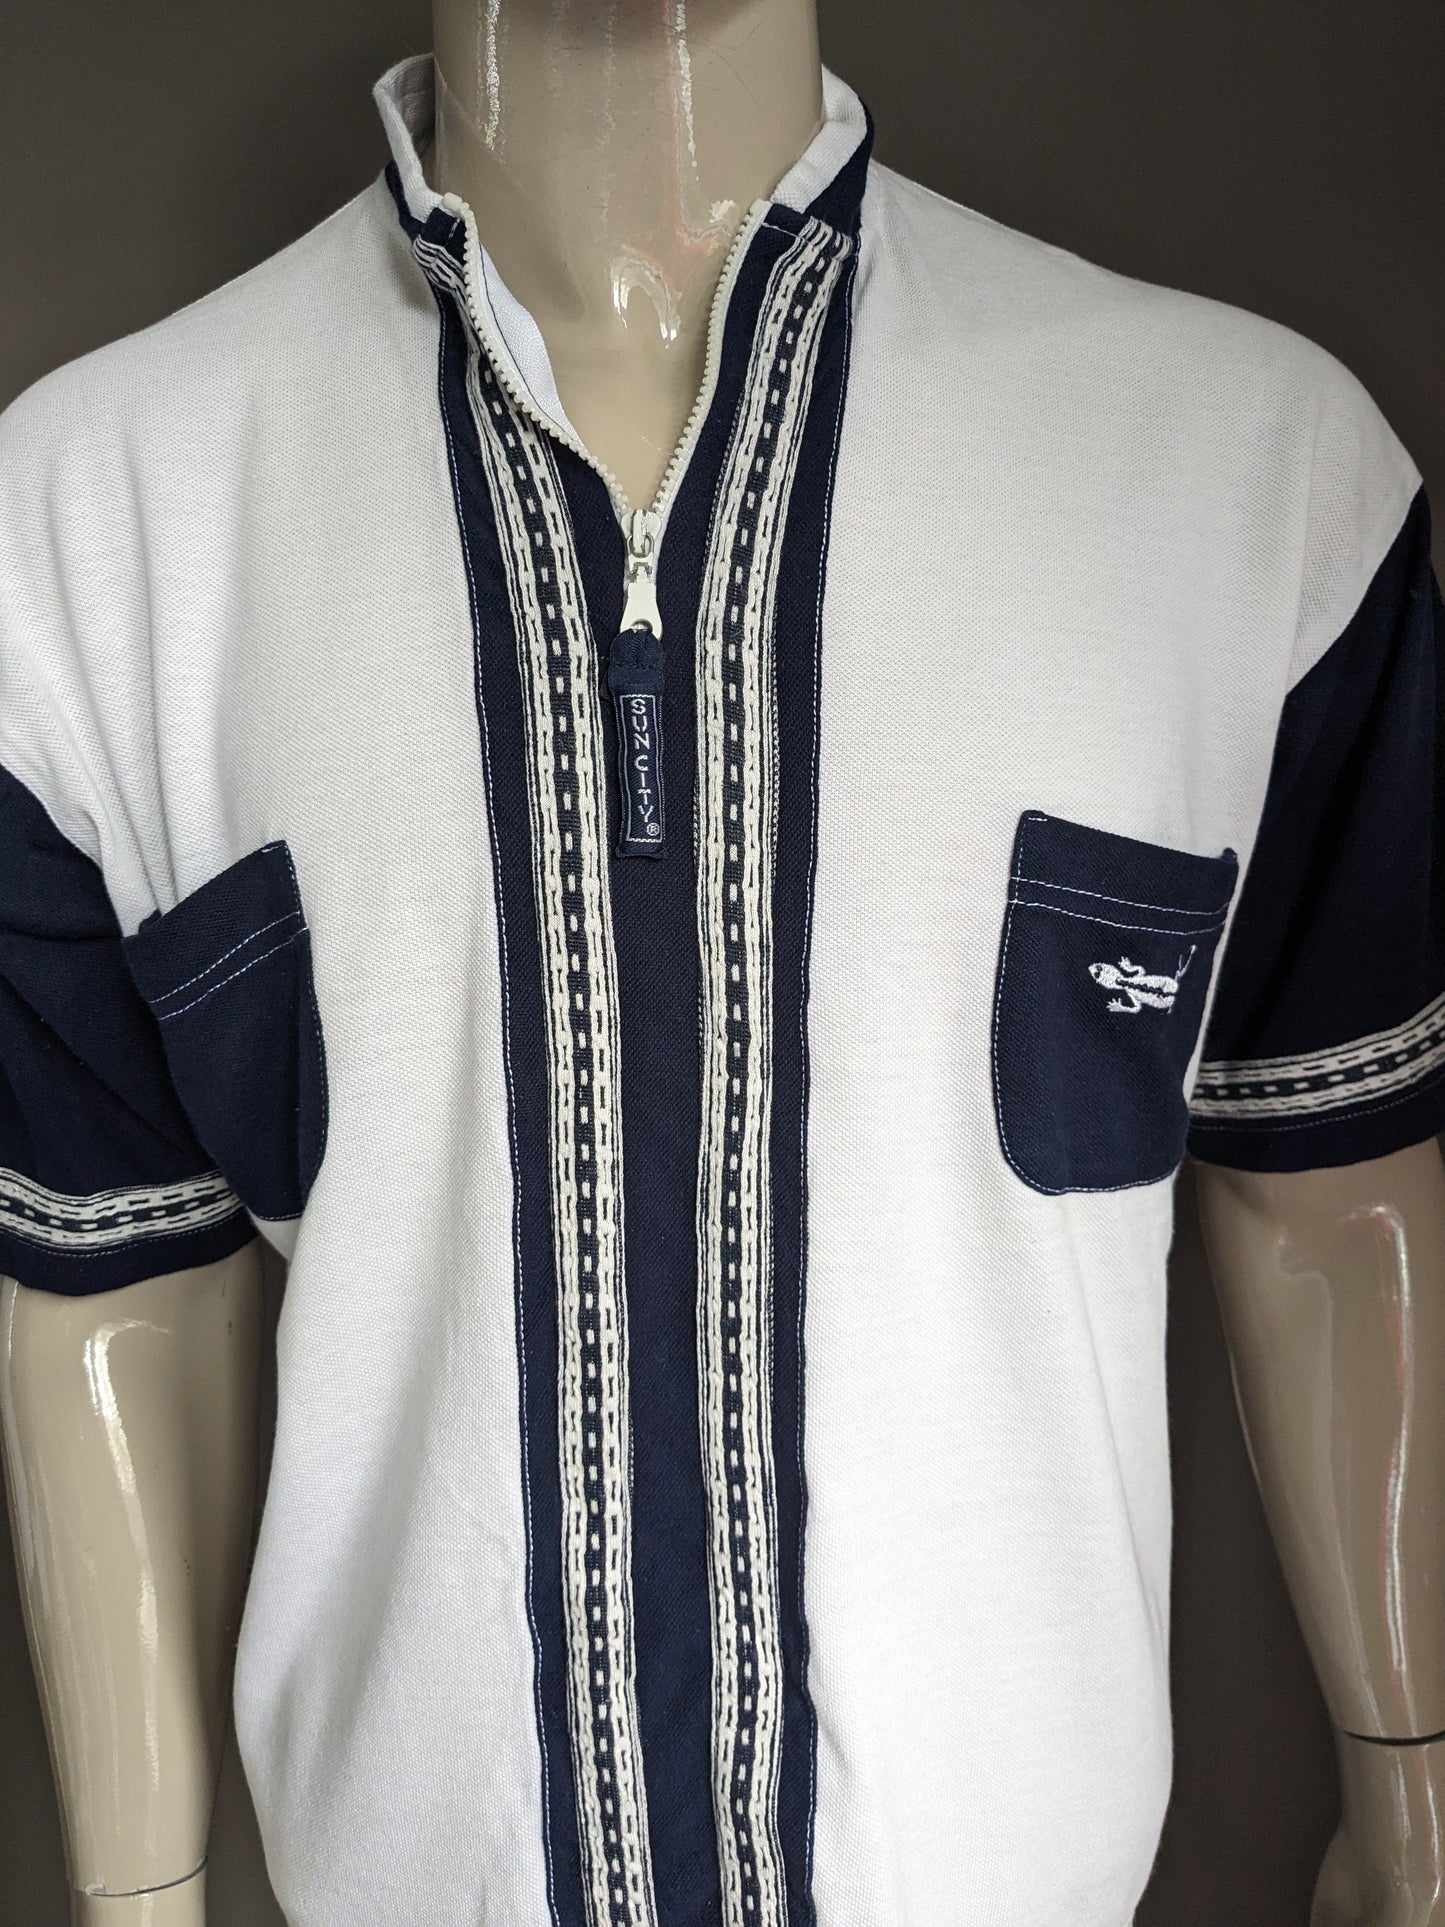 Vintage Sun City polo met rits. Blauw Wit gekleurd. Maat XL.